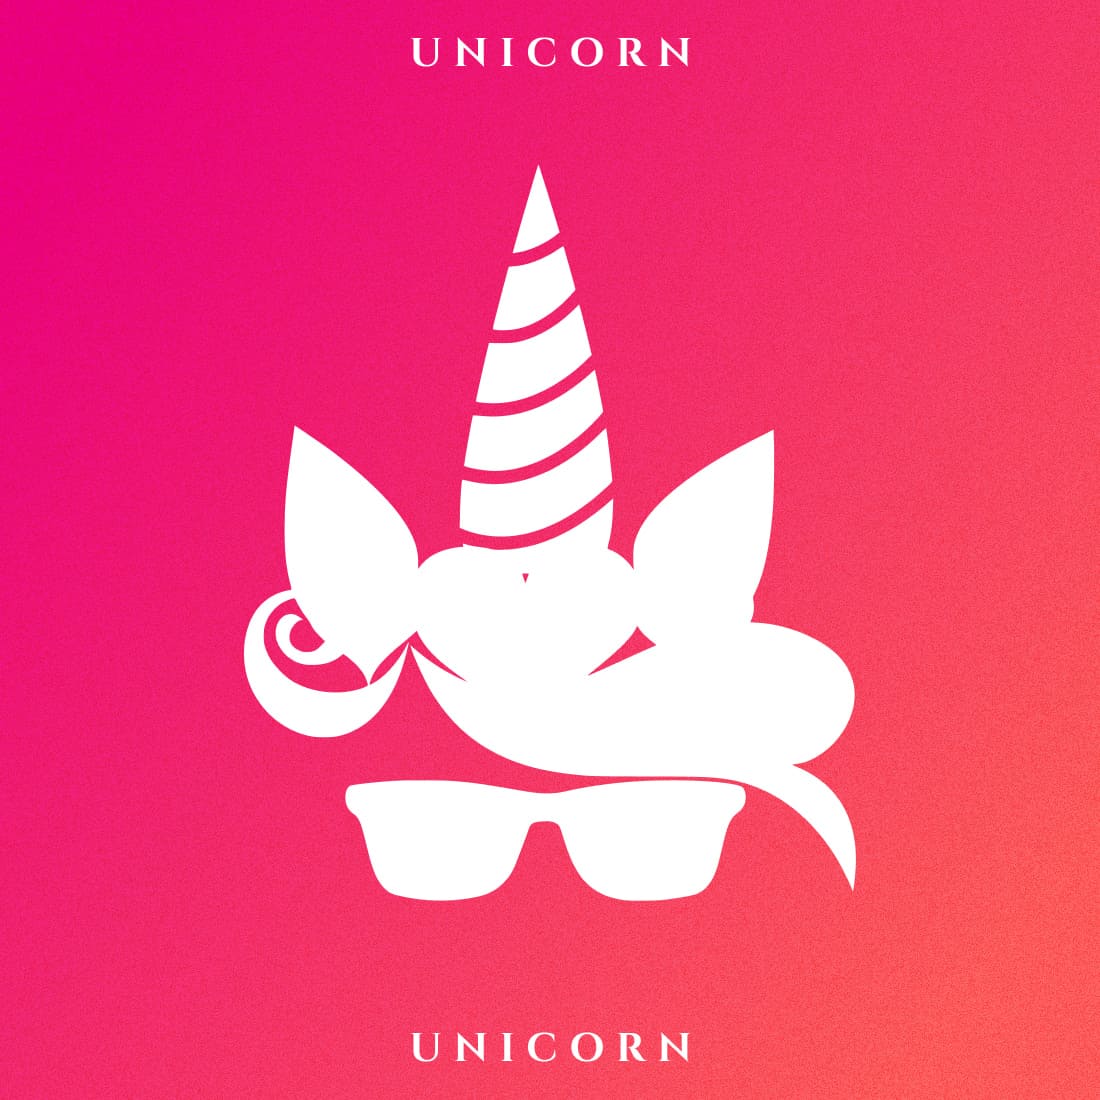 Unicorn - Pink Colorful Image.